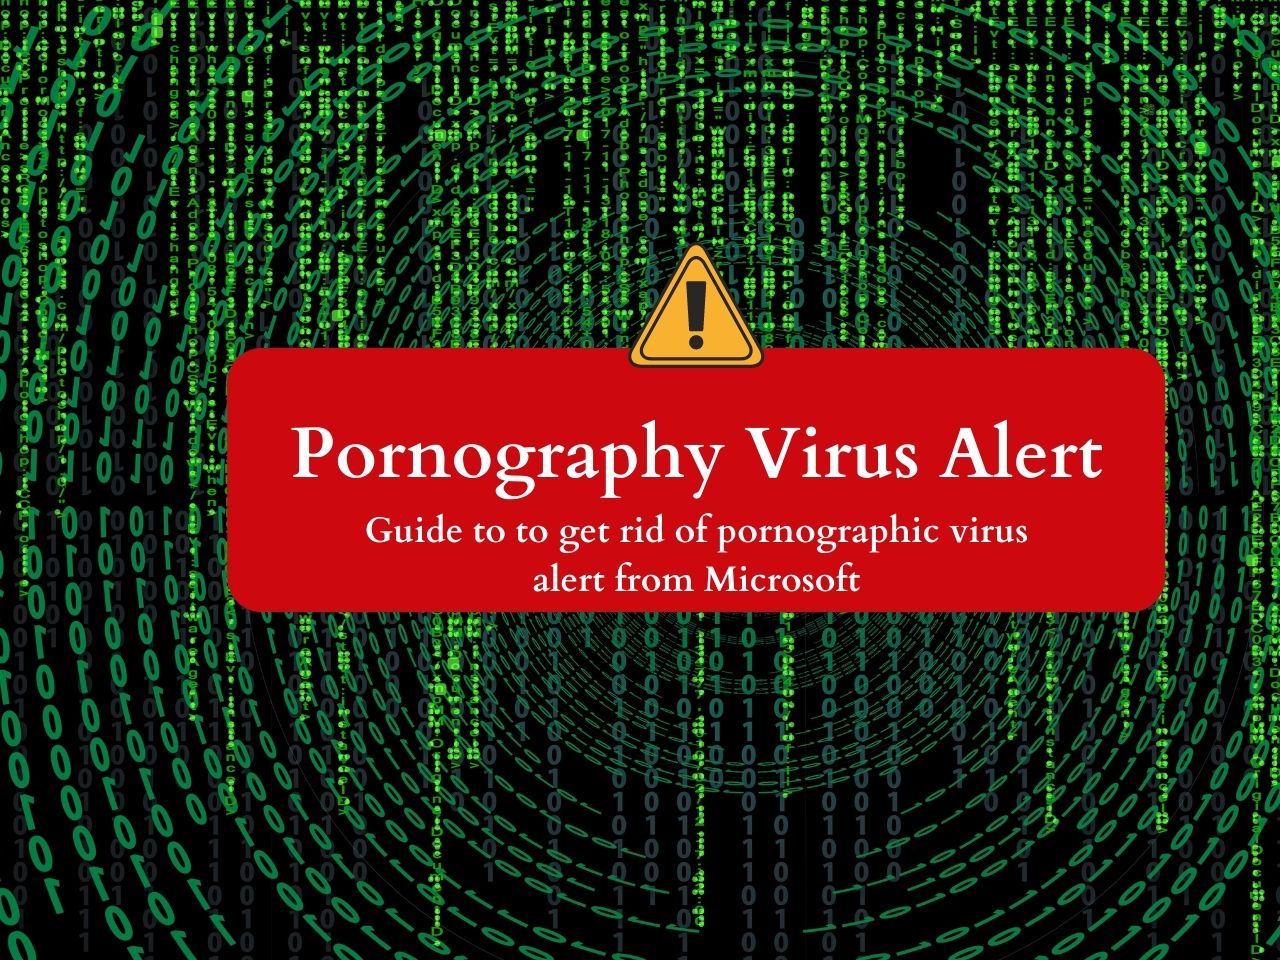 remove Pornography Virus Alert